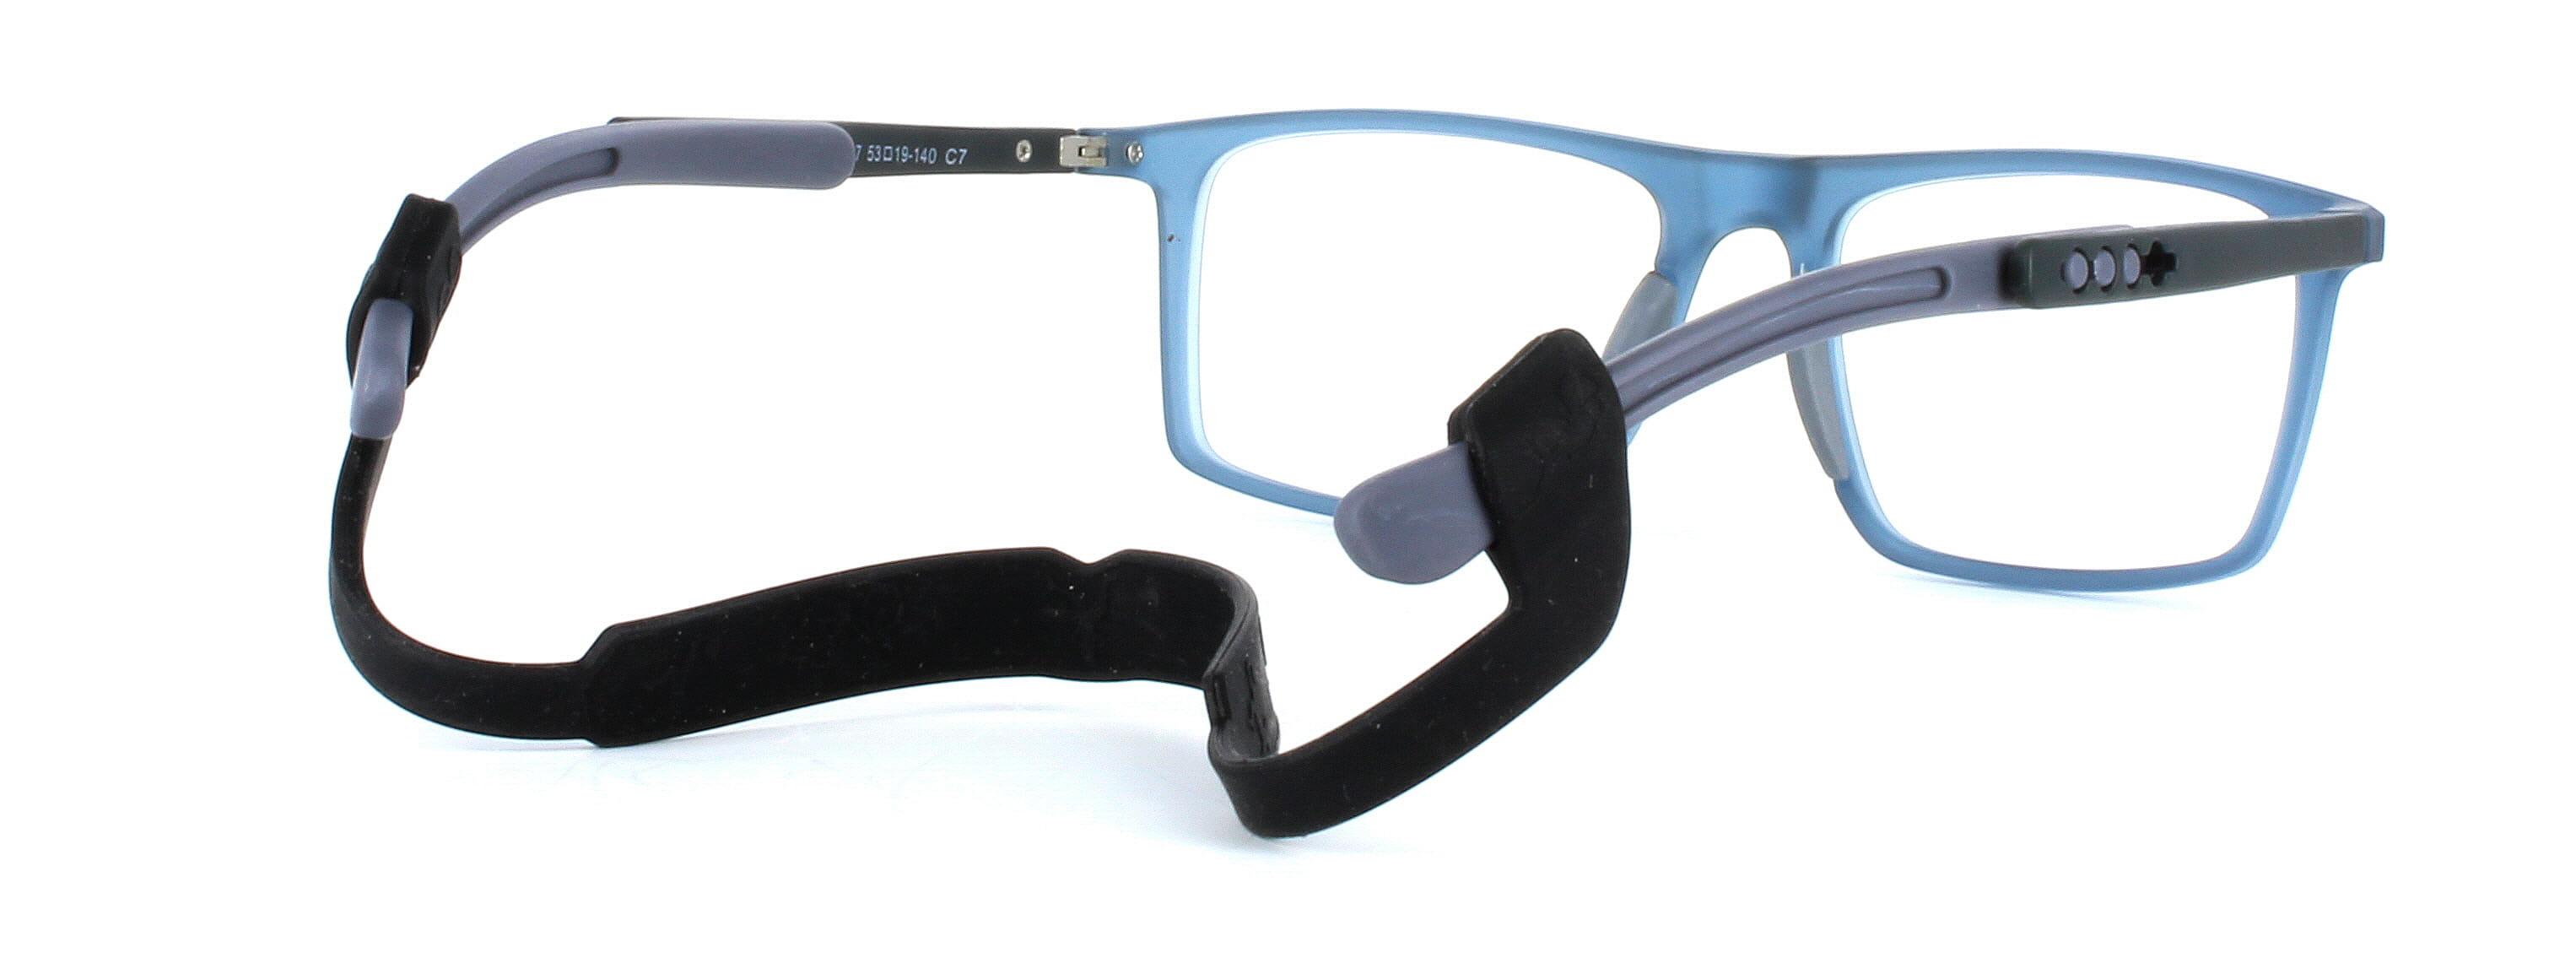 Jumper - unisex prescription sports glasses in matt blue - image view 4